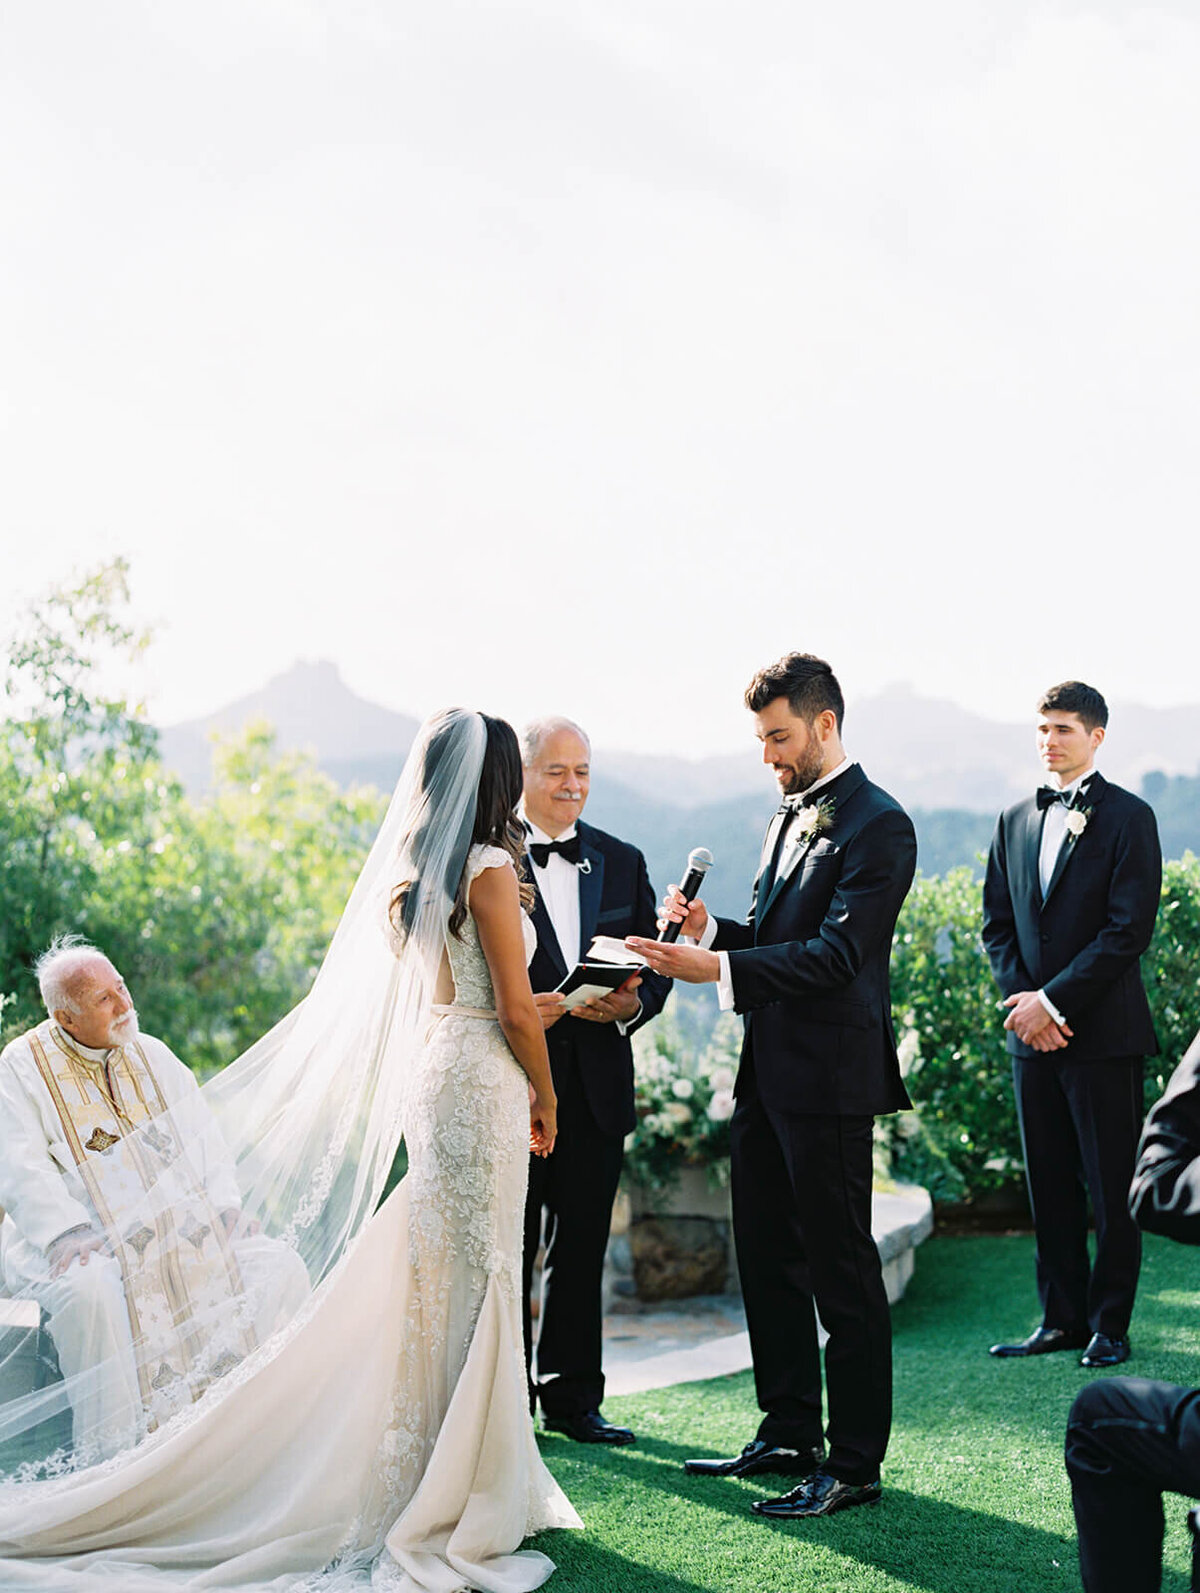 RubaMarshall-Wedding-Malibu-Jon-Cu-Photography-Film-Photographer283022292-R1-E001